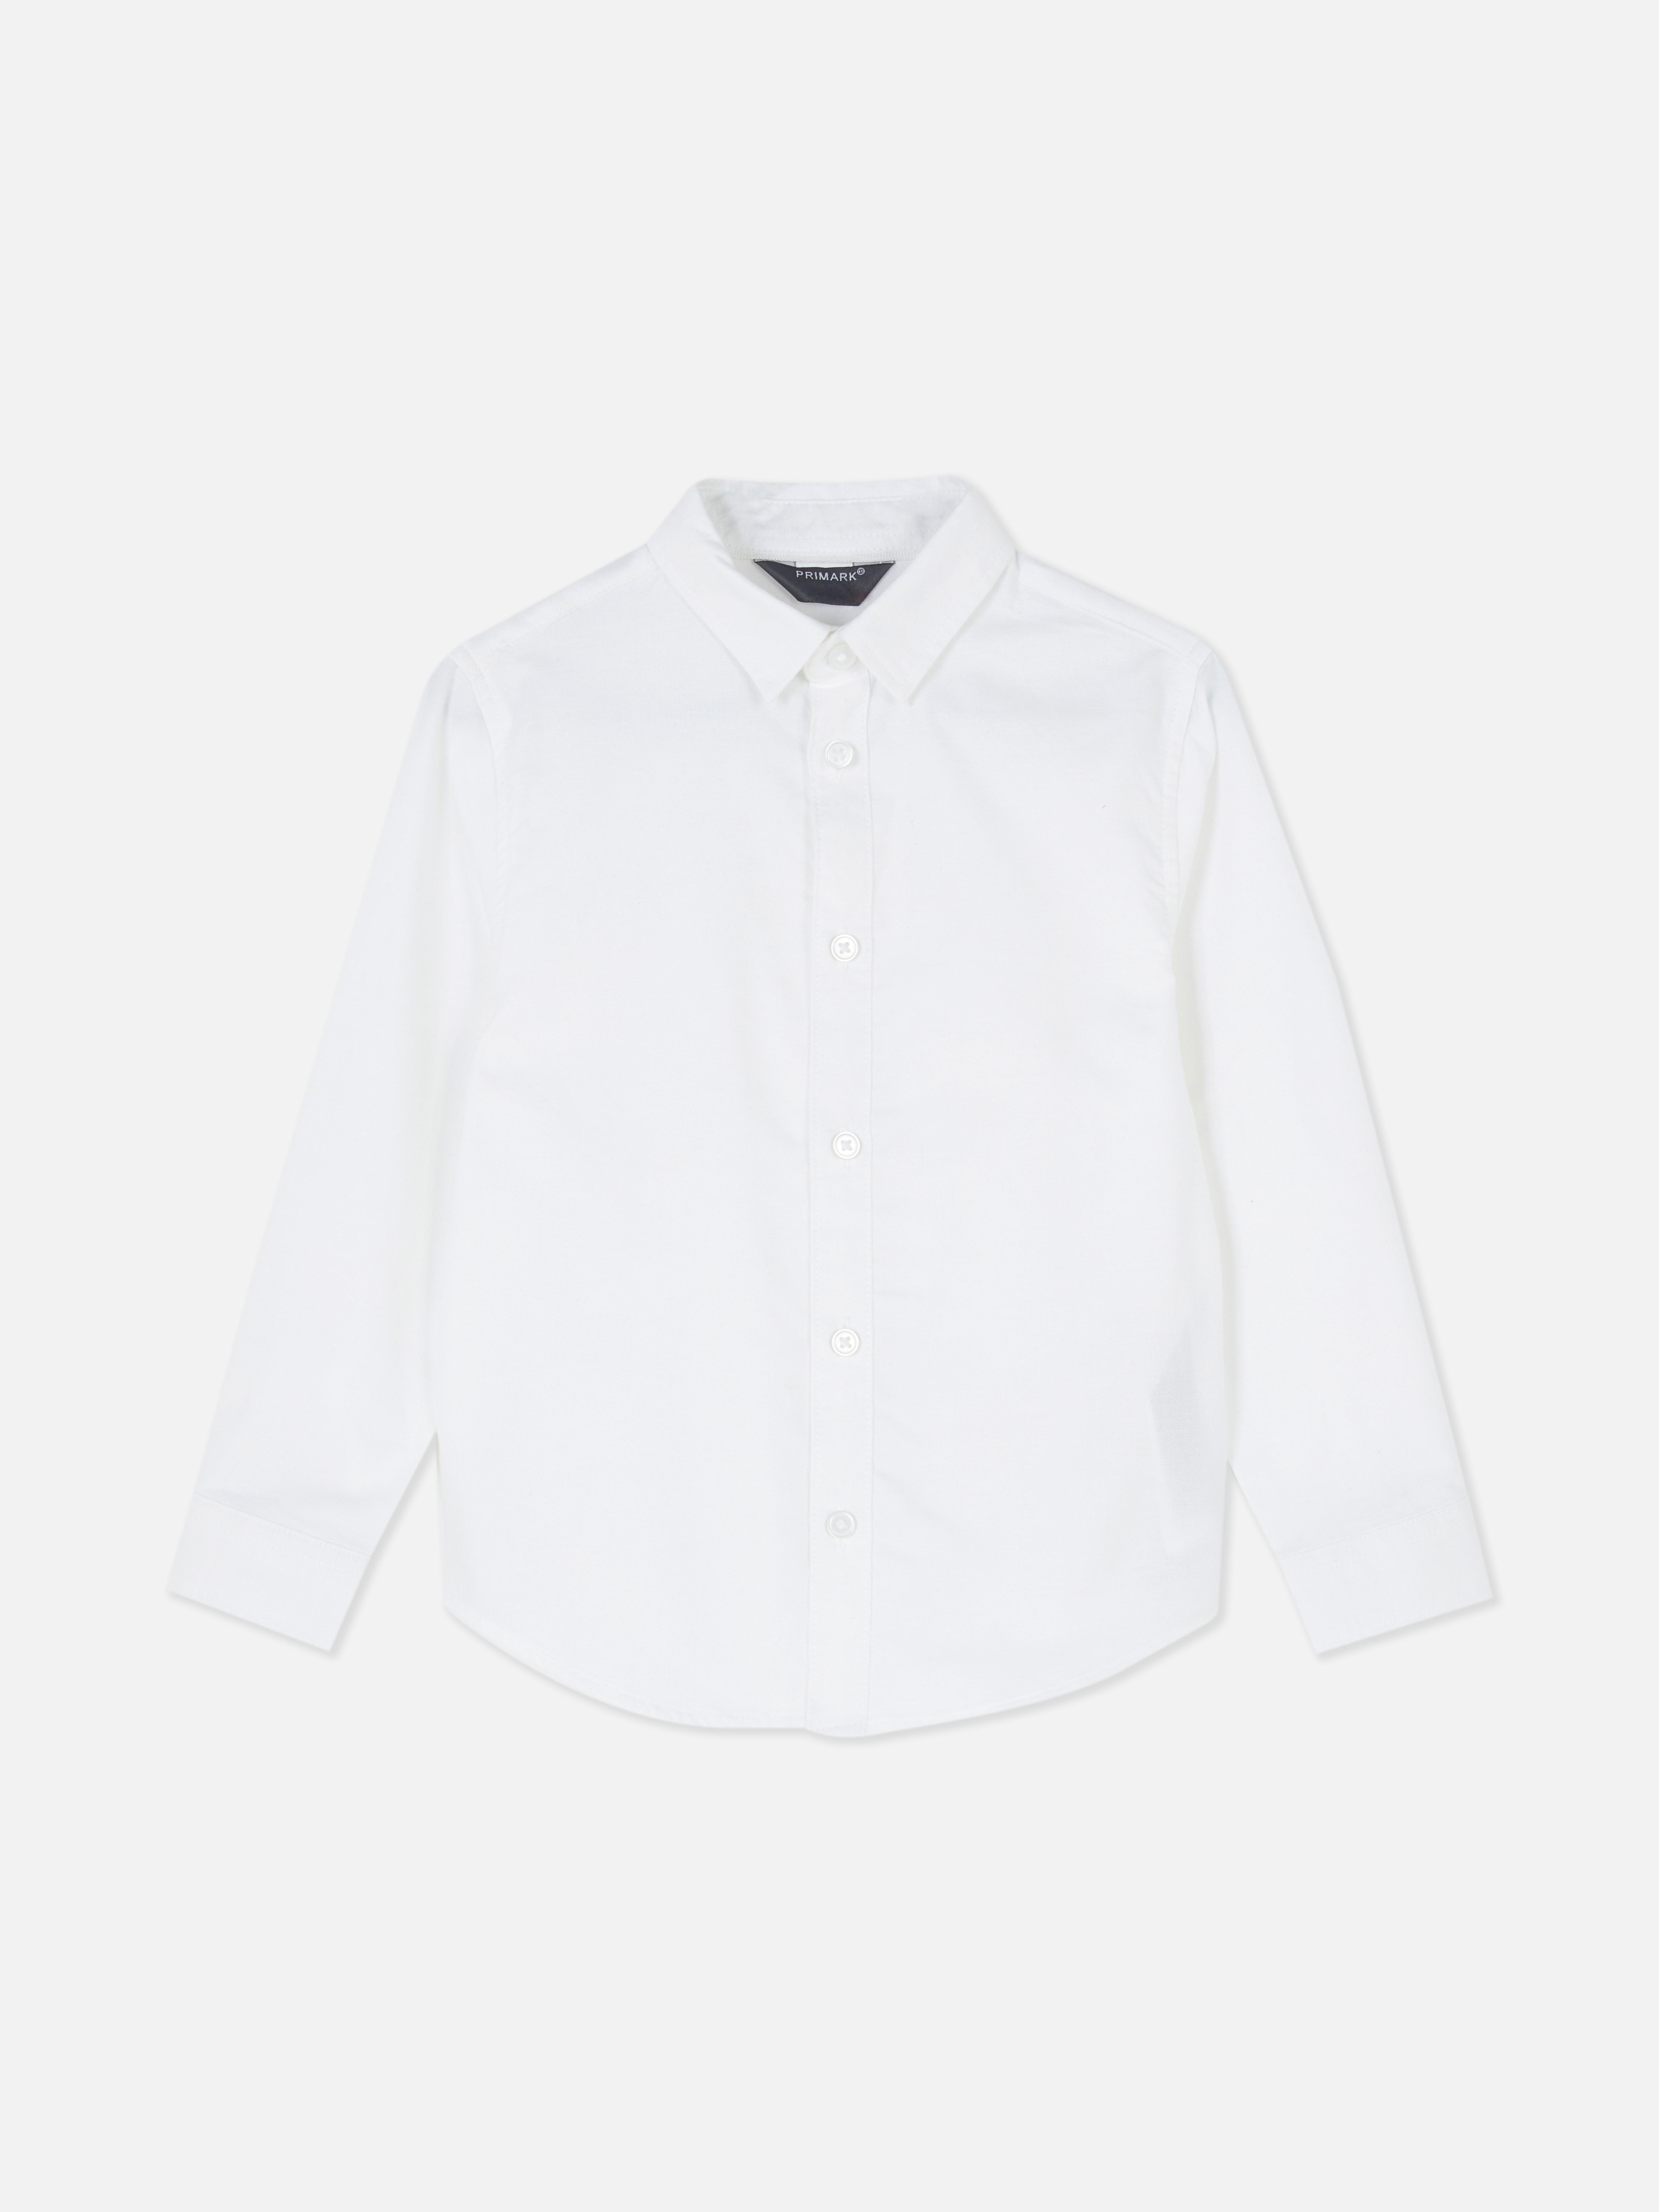 Oxford Long Sleeve Shirt